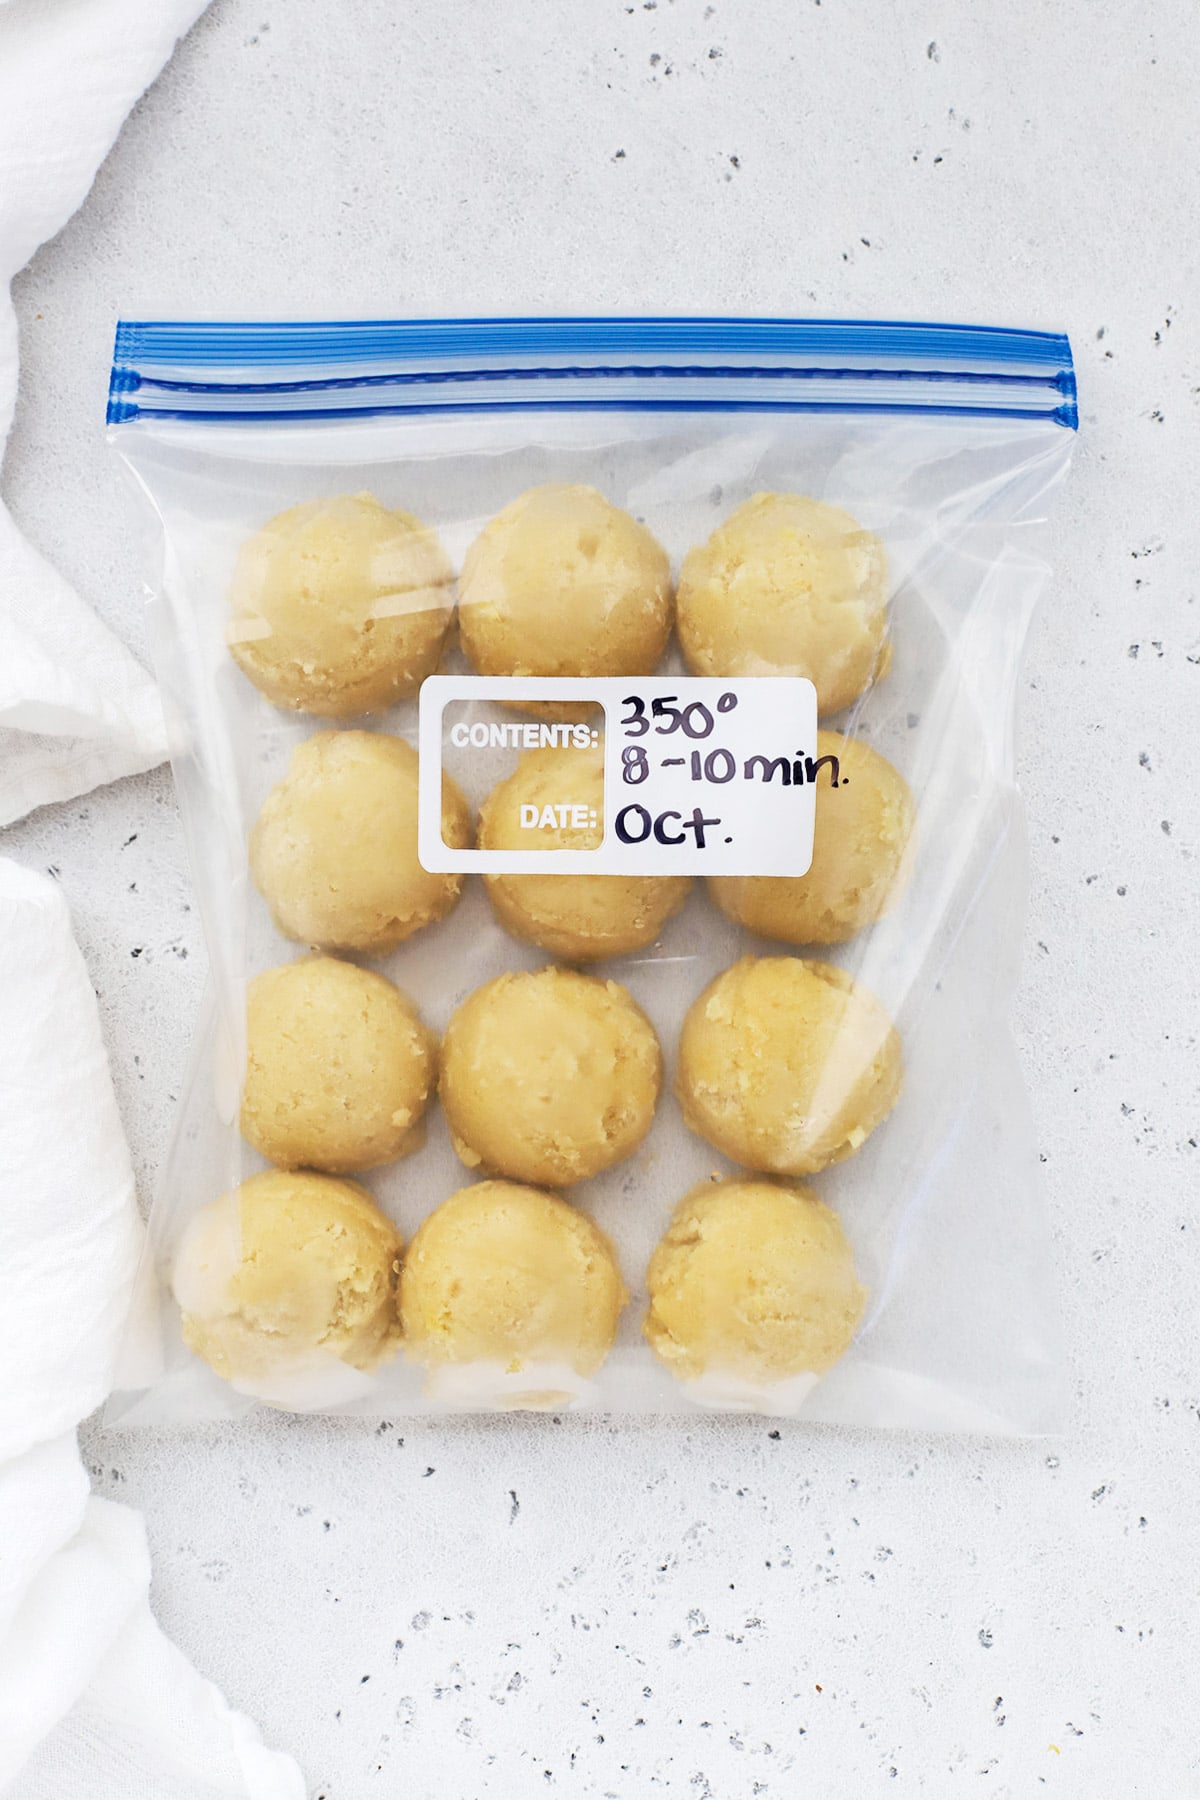 Overhead view of frozen sugar cookie dough balls